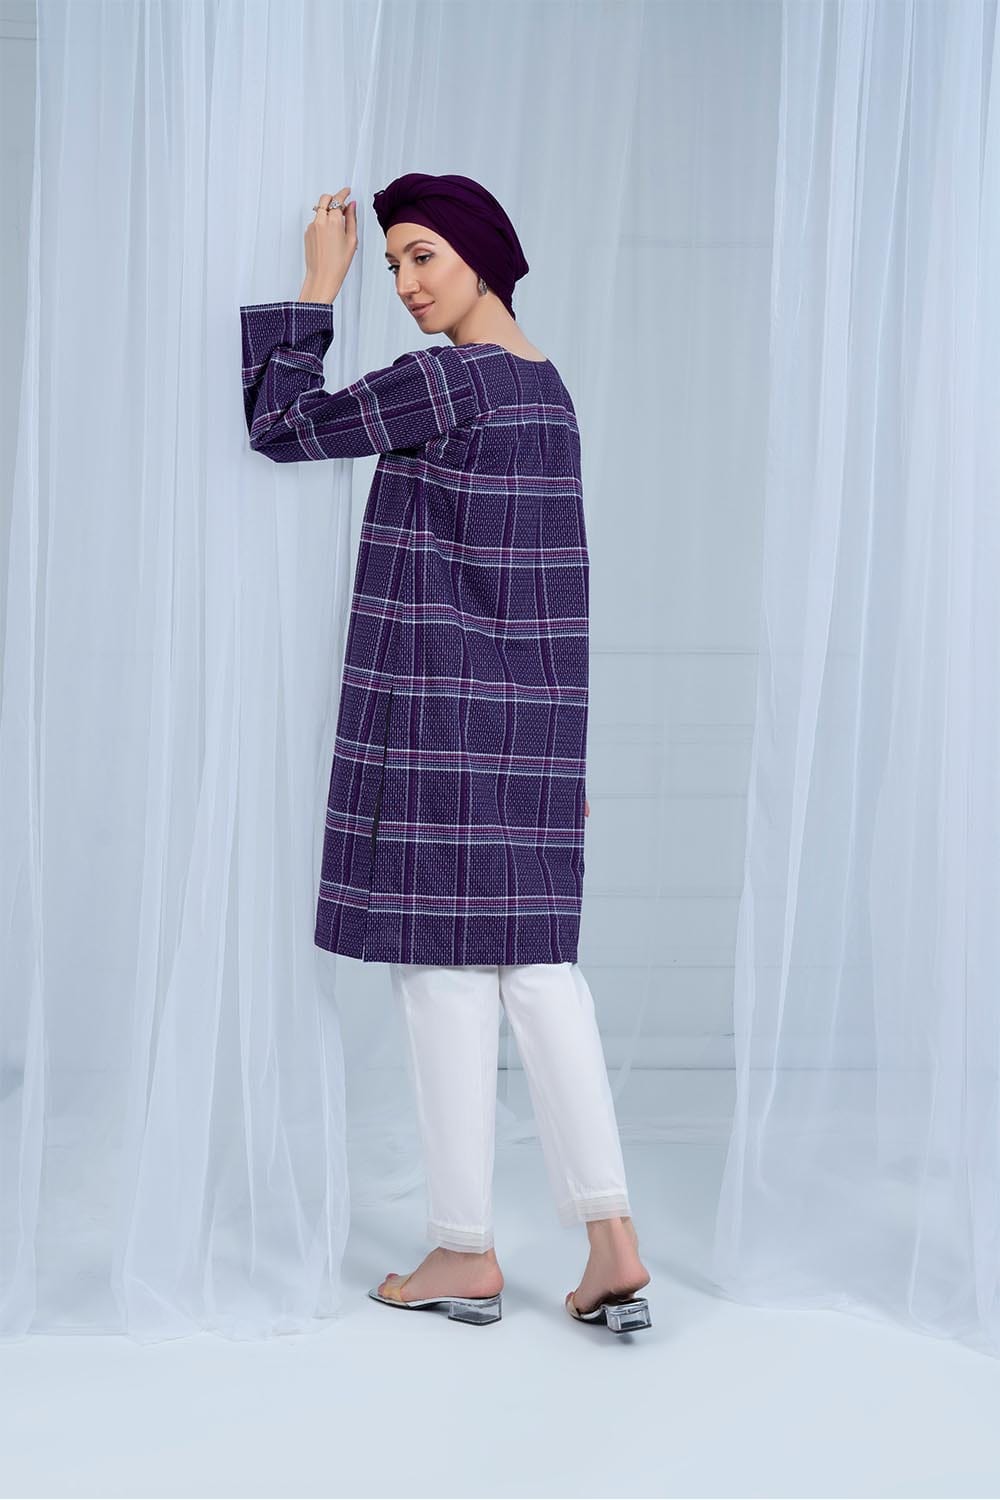 Hope Not Out by Shahid Afridi Eastern Women Shirts Purple Check Jacquard Kurta